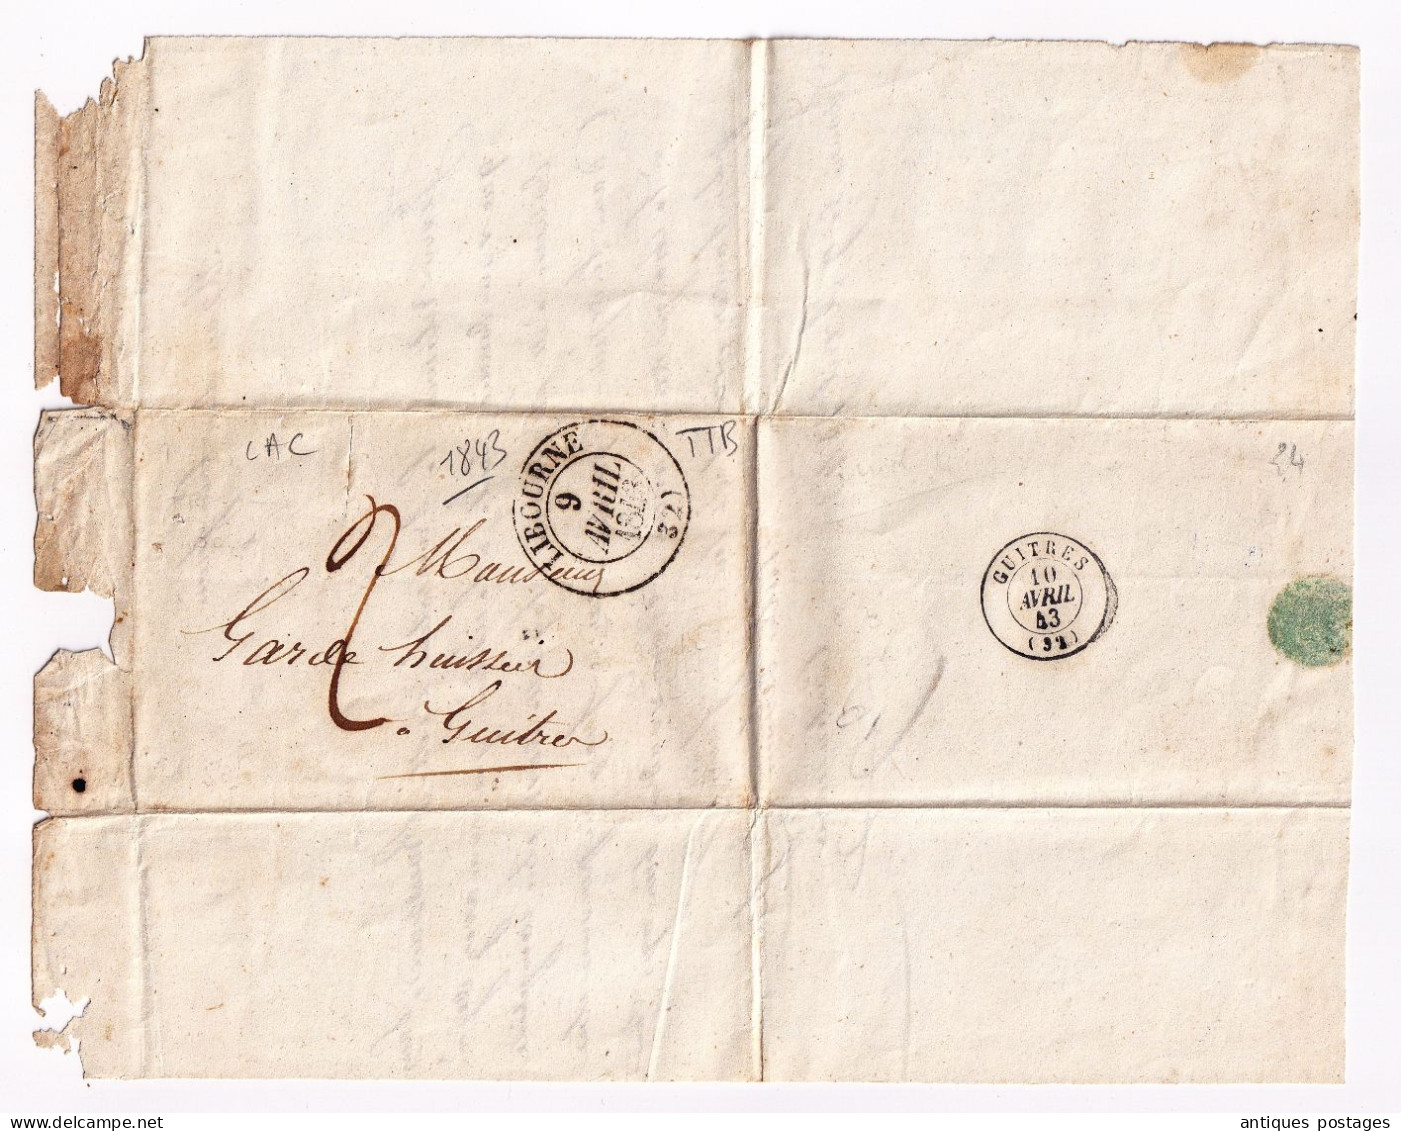 Lettre 1843 Avec Correspondance Libourne Pour Guîtres Gironde - 1801-1848: Precursors XIX